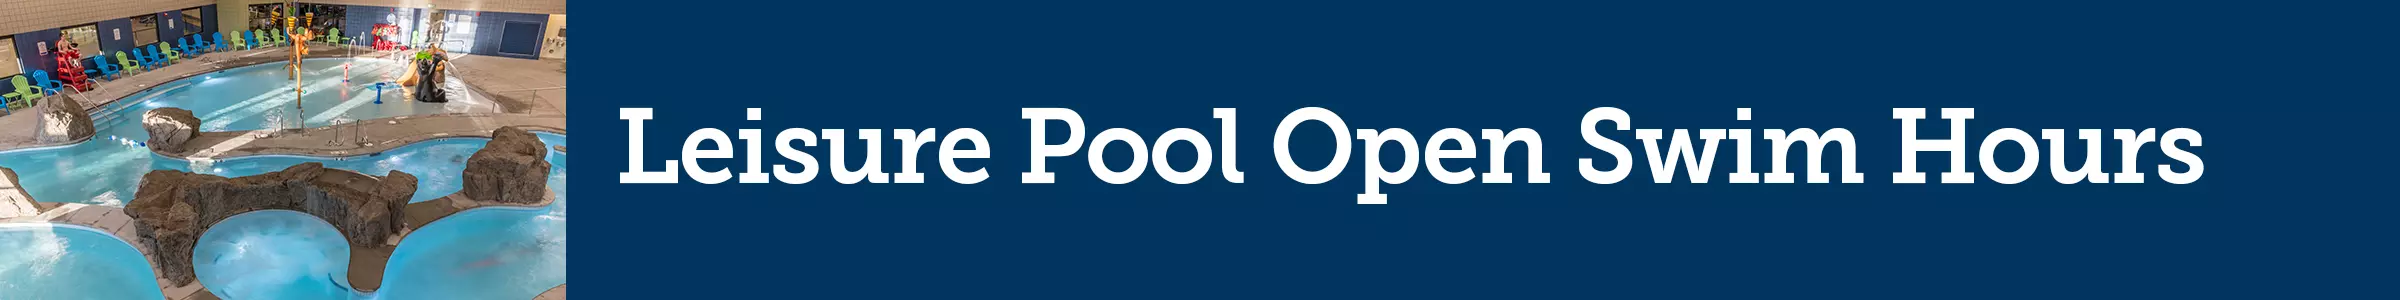 Leisure Pool open swim hours